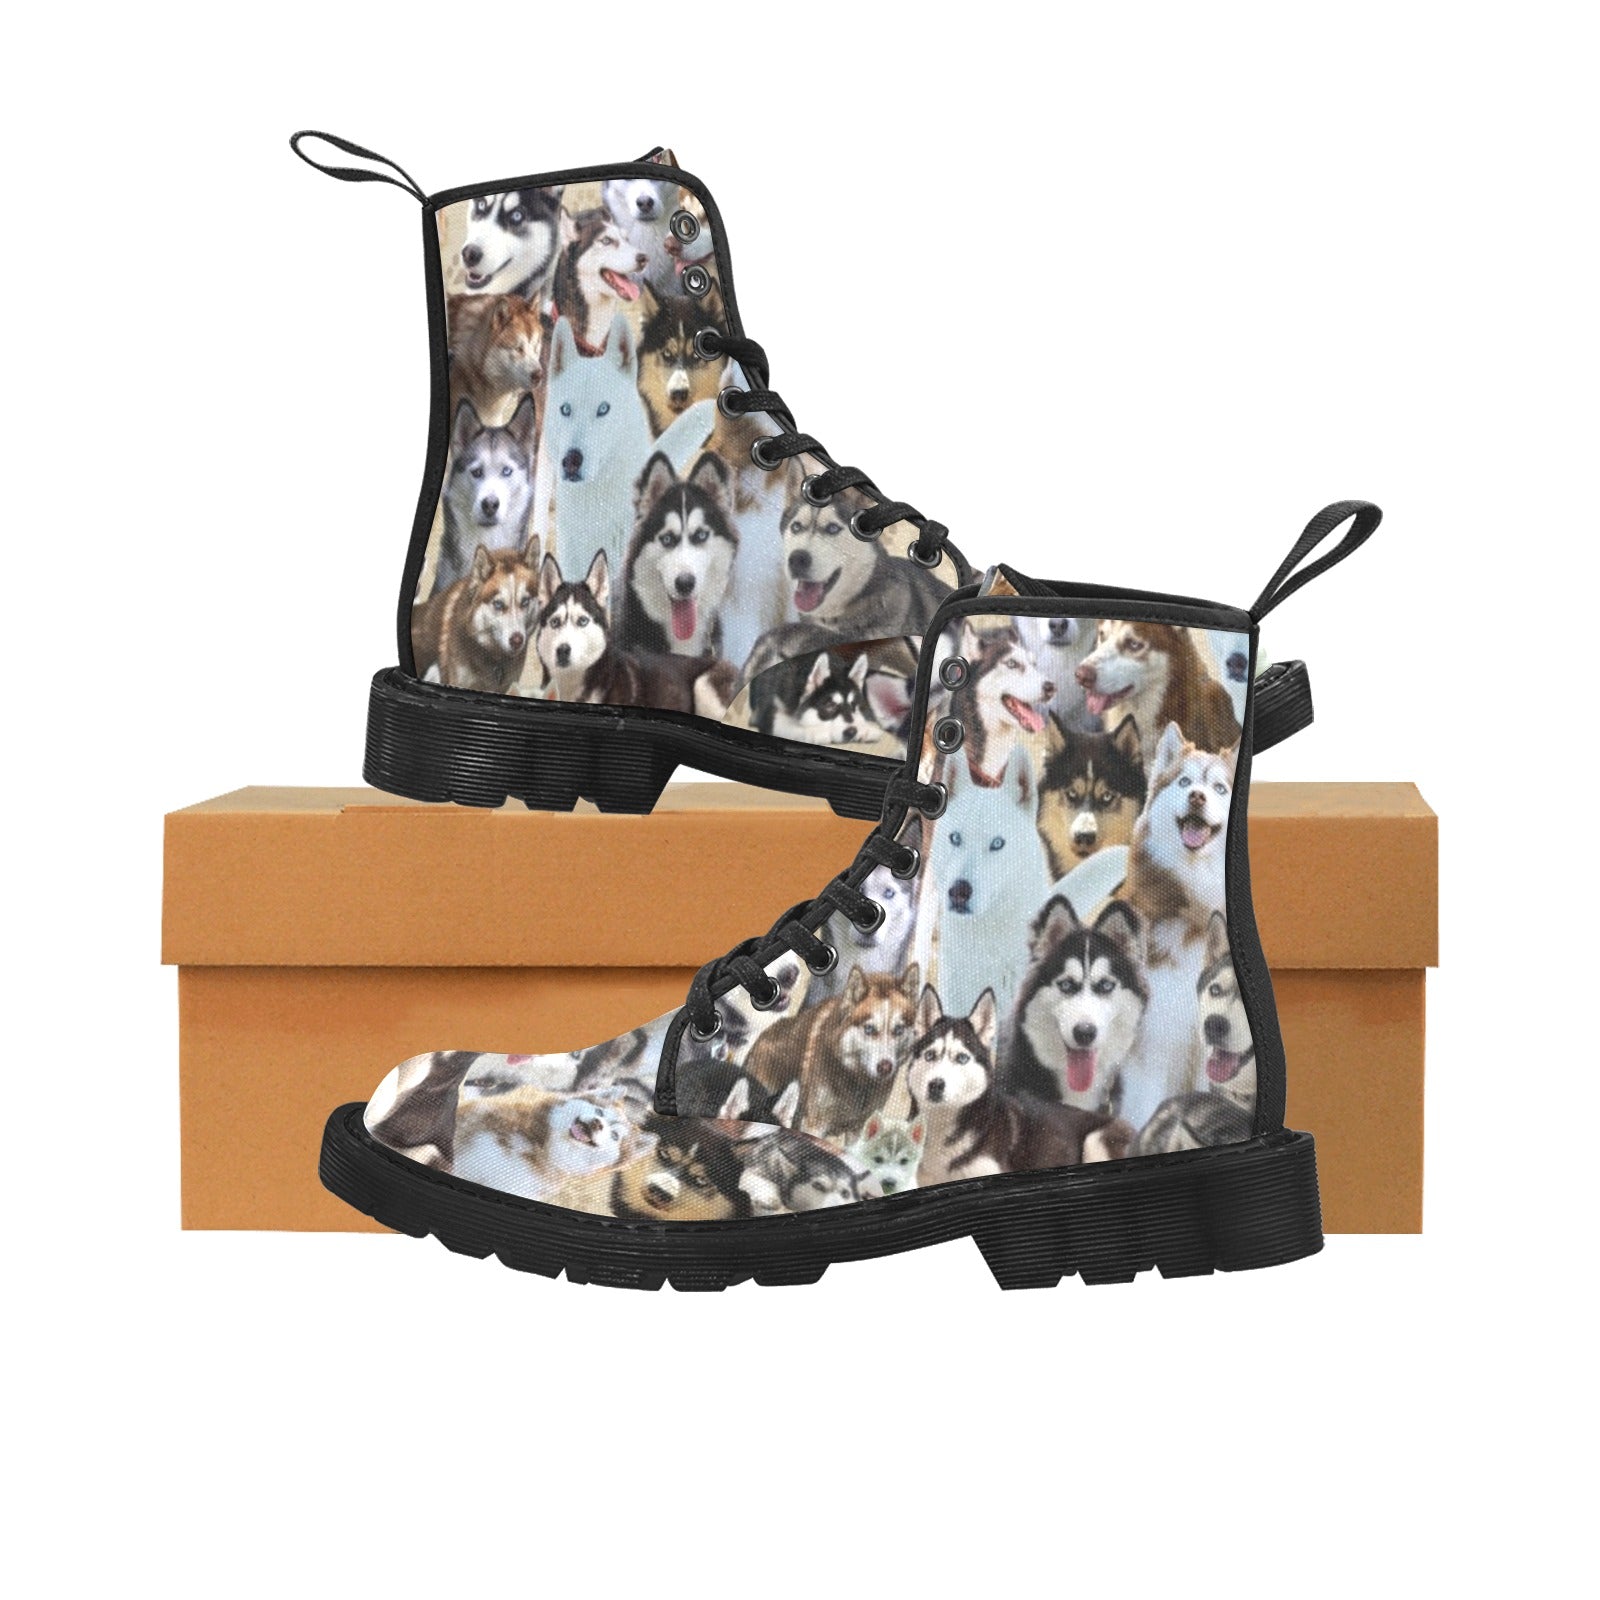 Husky - Canvas Boots